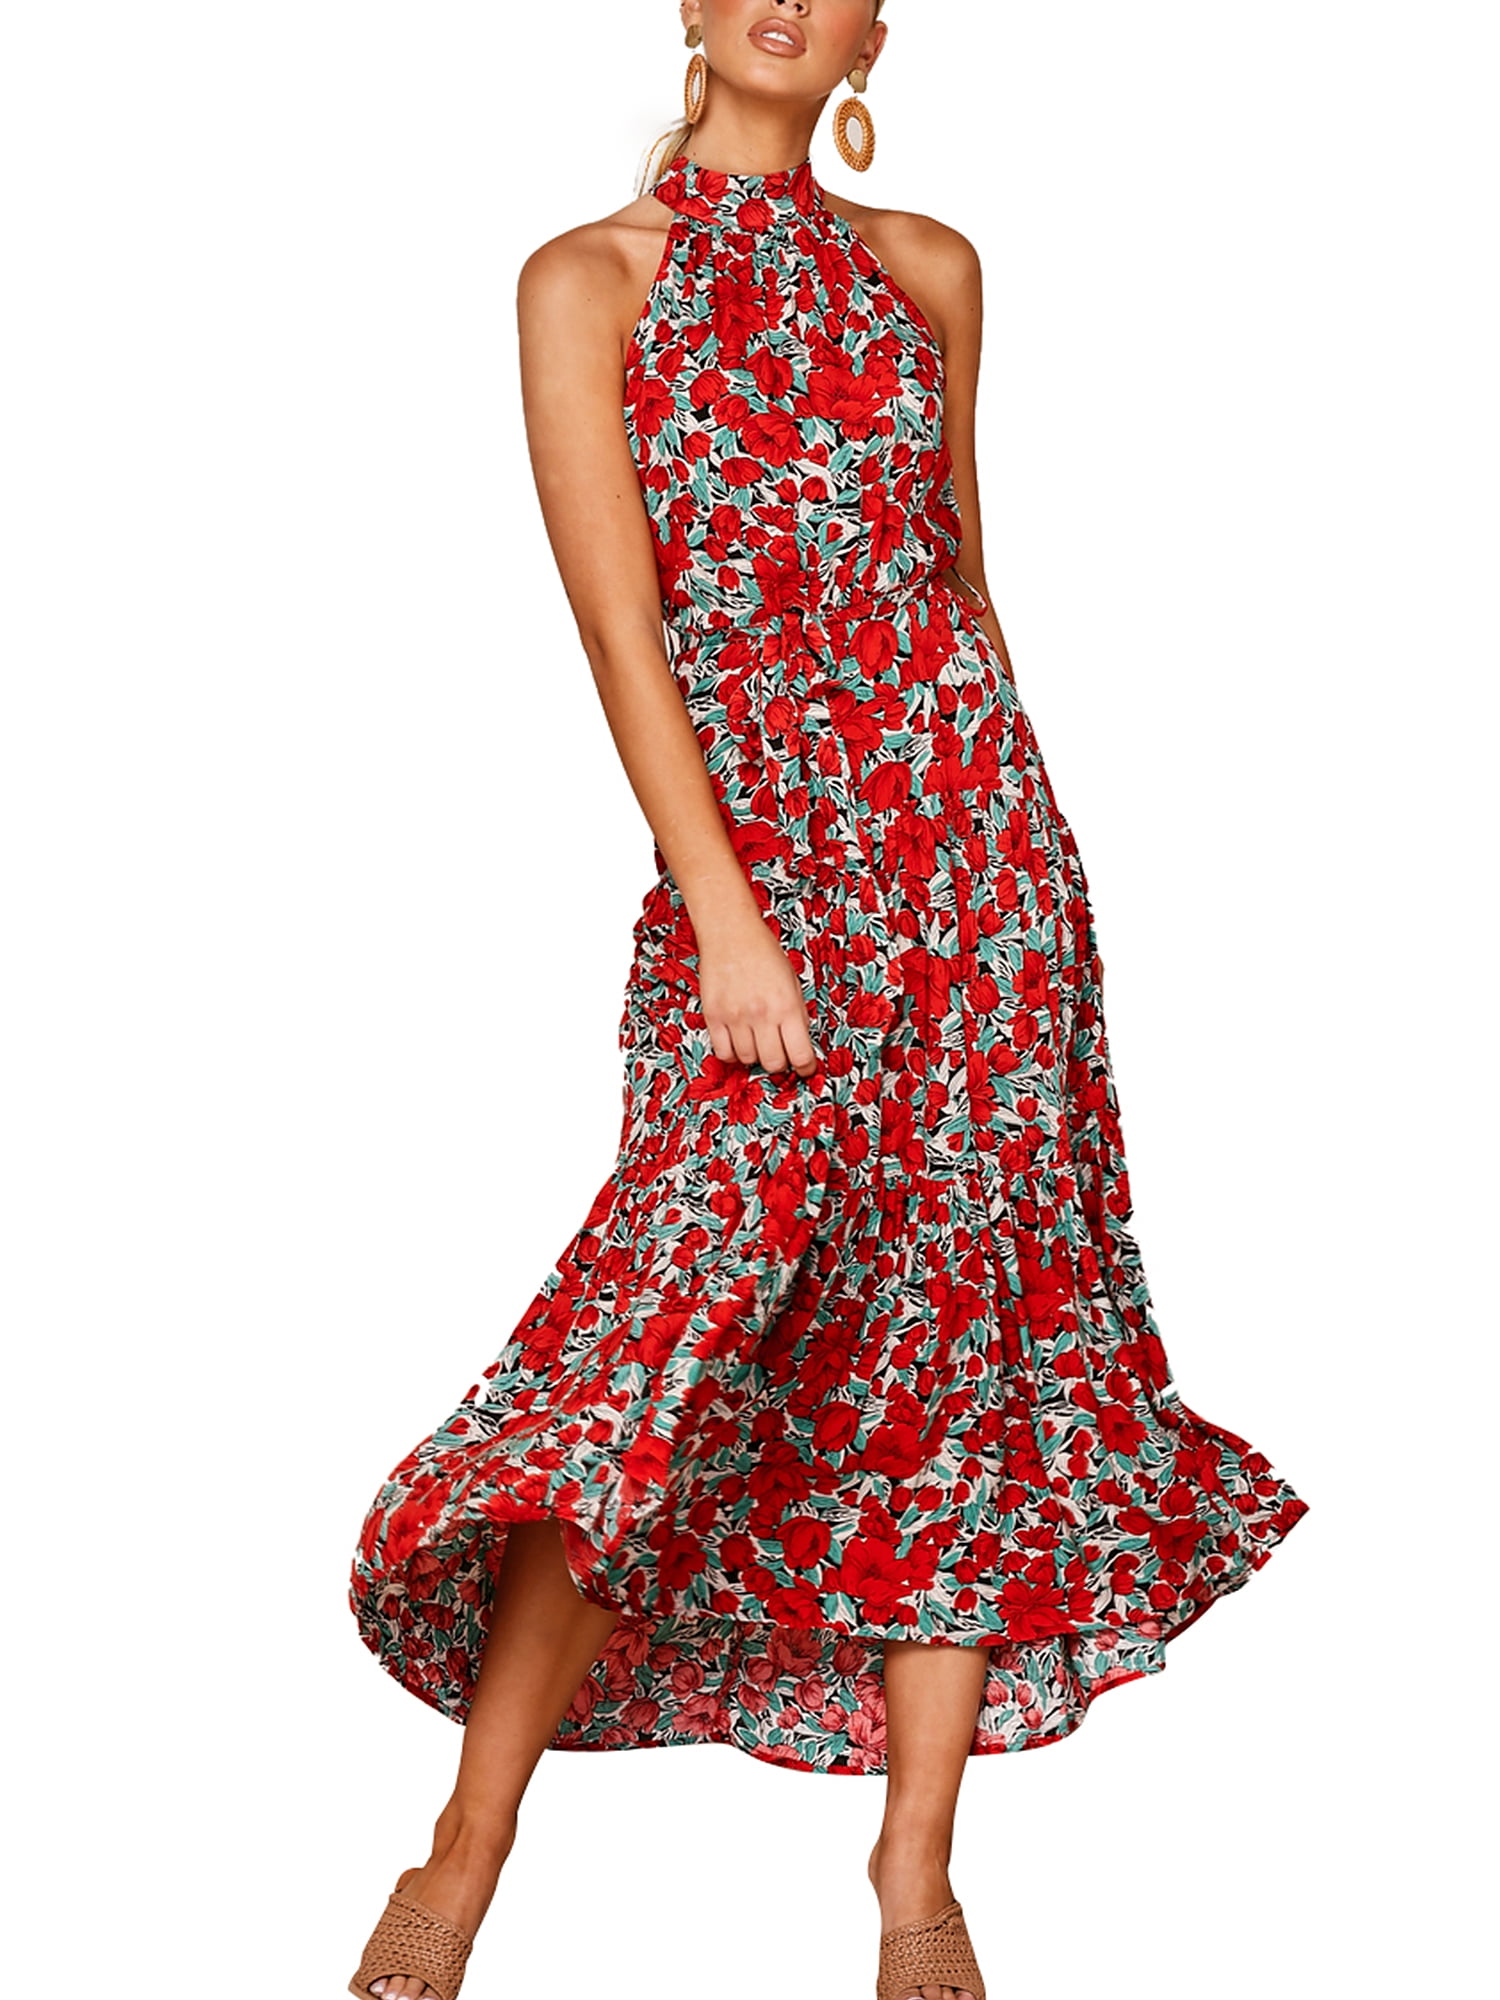 Londony ◈ Womens Halter Neck Floral Summer Casual Sundress Sleeveless Adjustable Strappy Summer Beach Swing Dress 